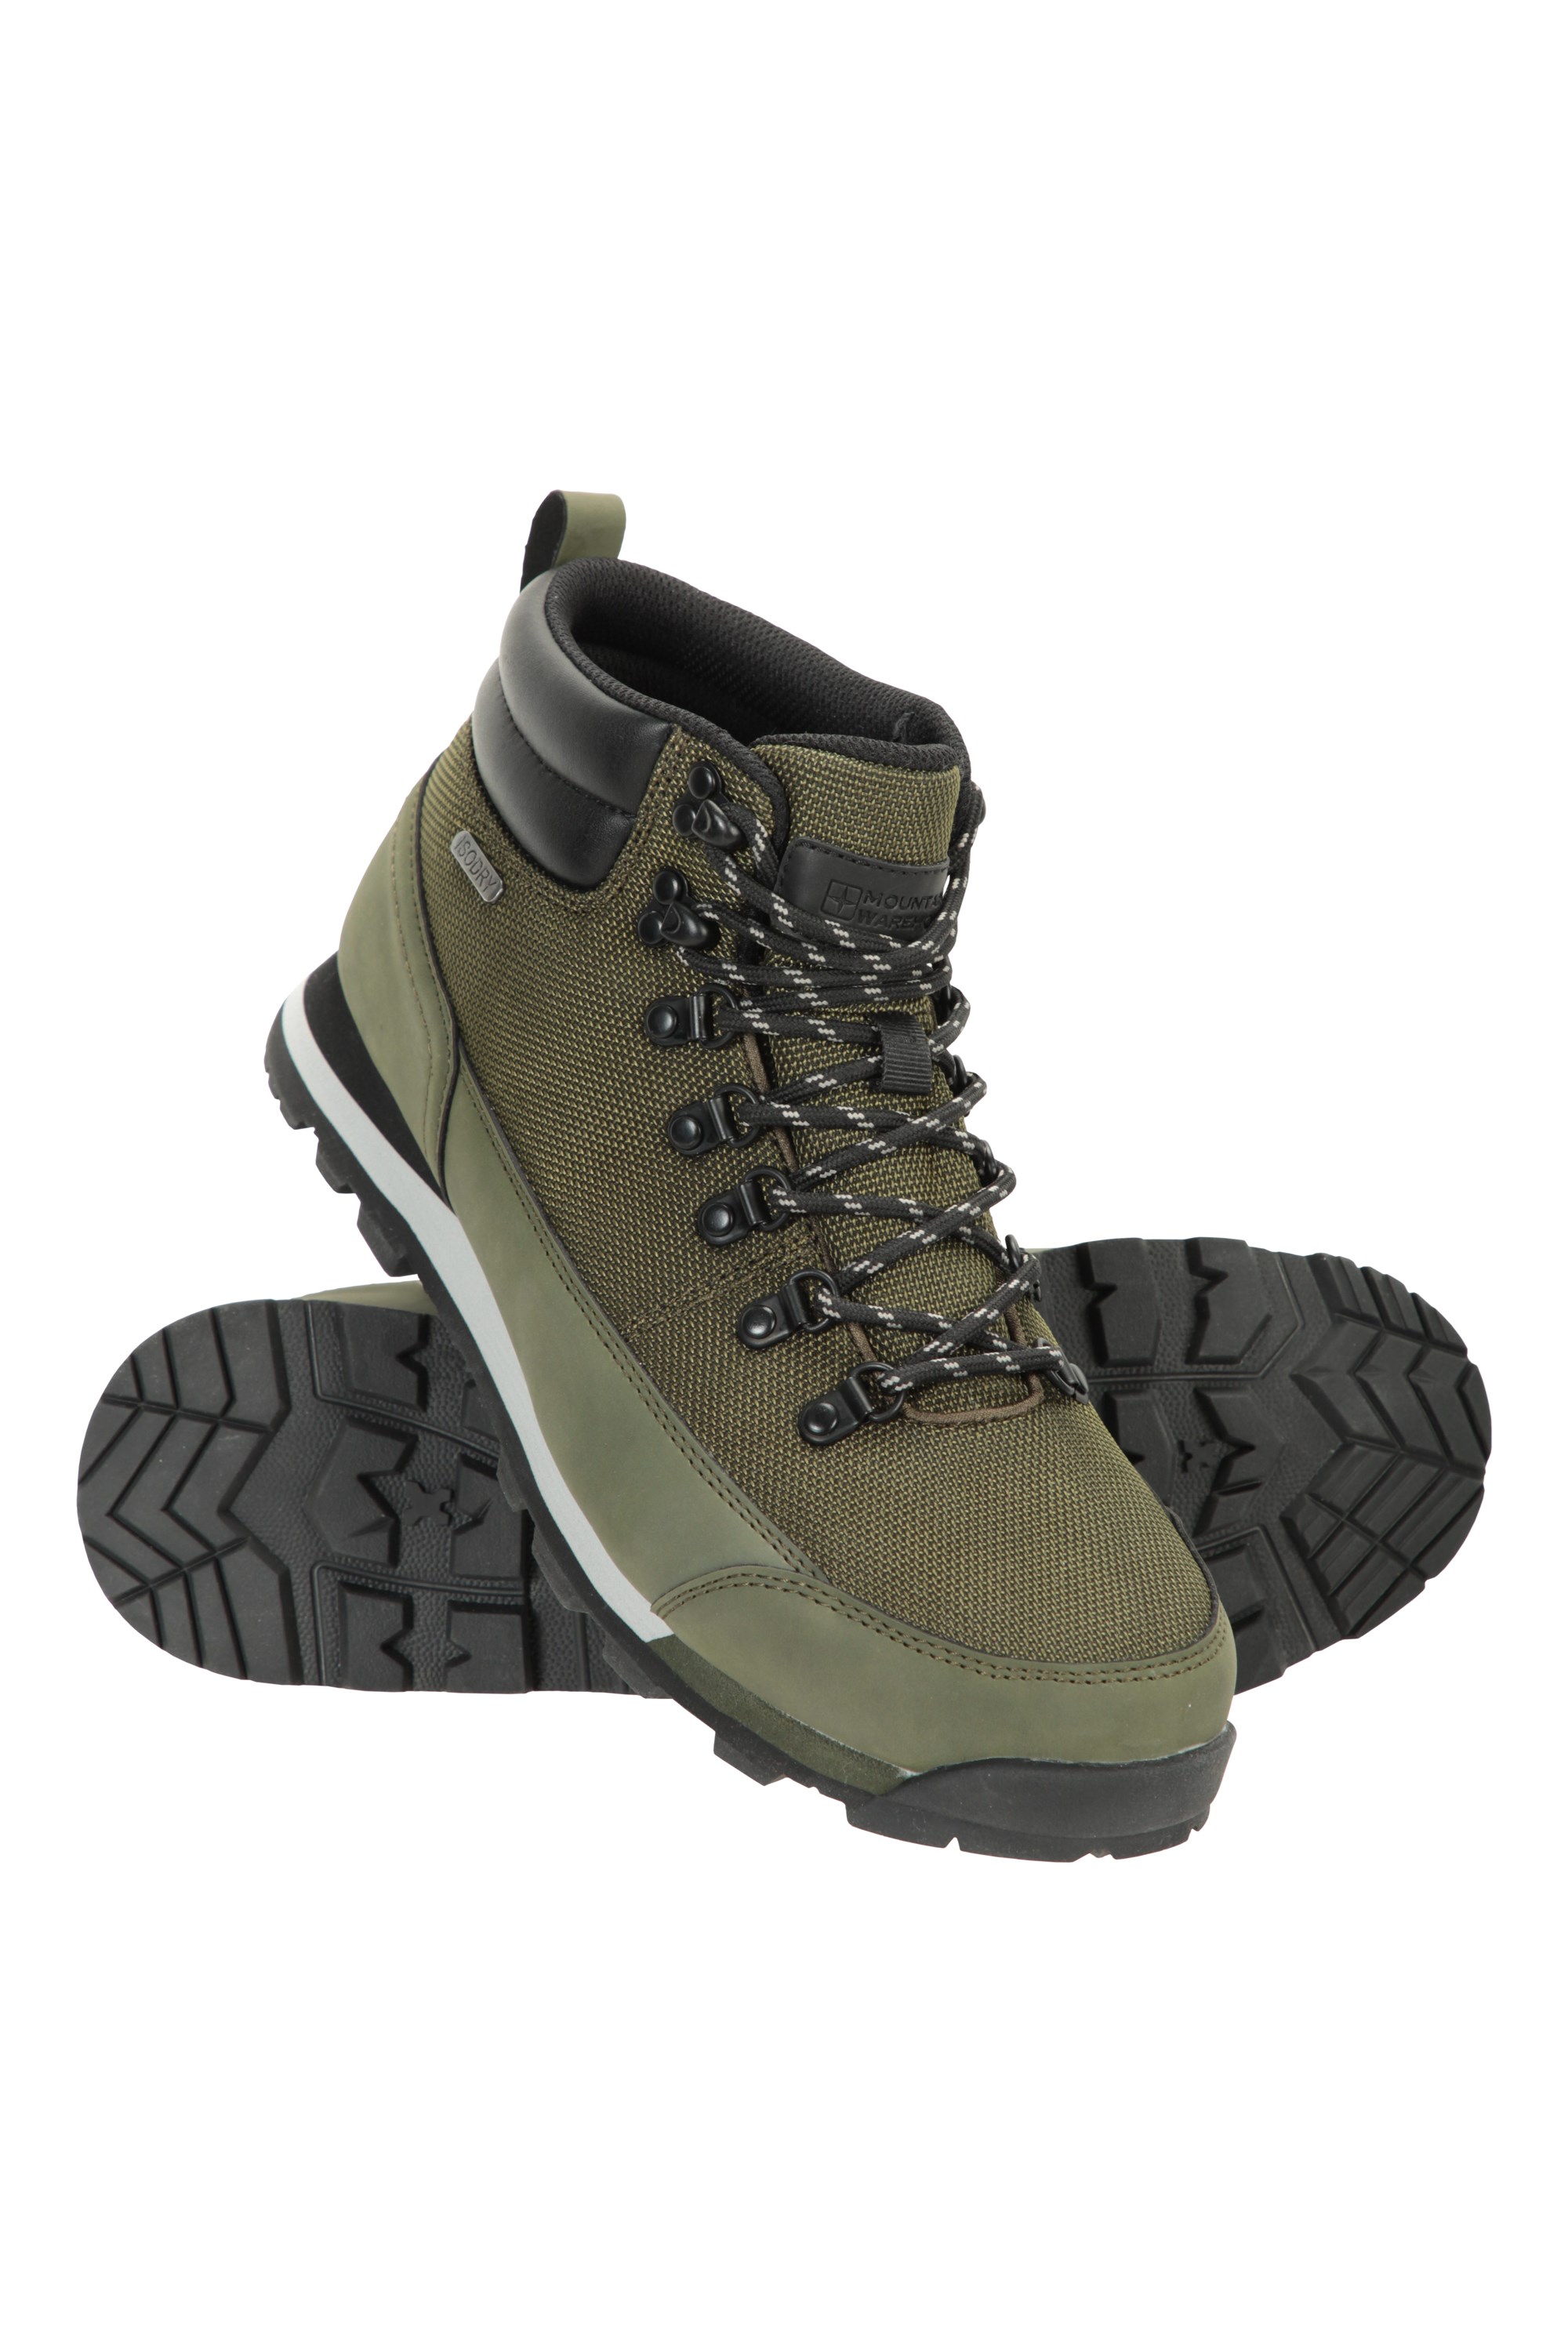 Amplitude Casual Waterproof Mens Boots - Green